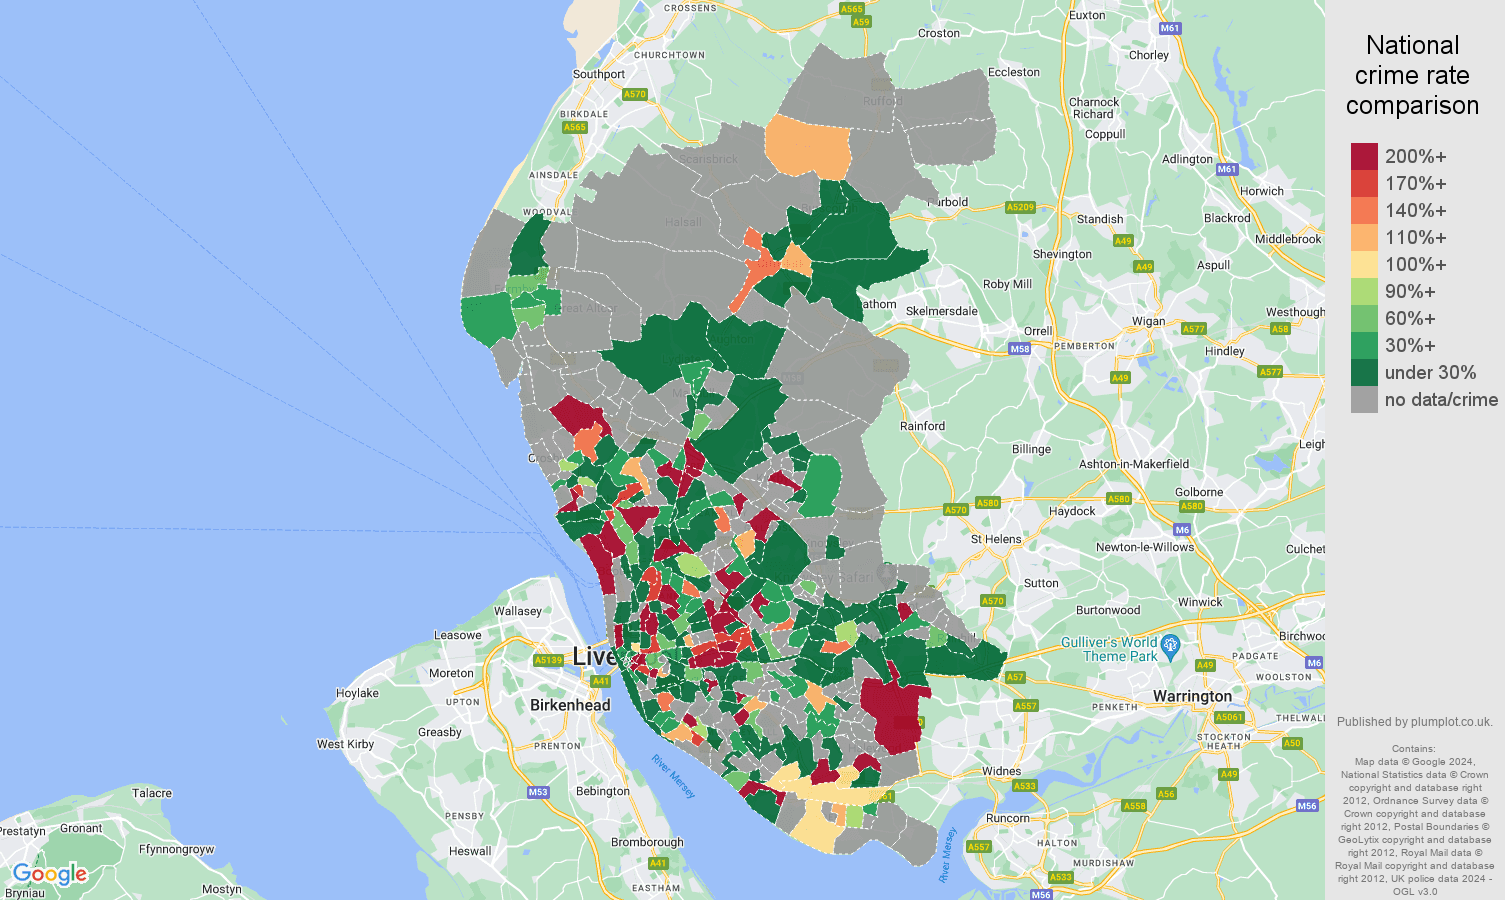 Liverpool shoplifting crime rate comparison map